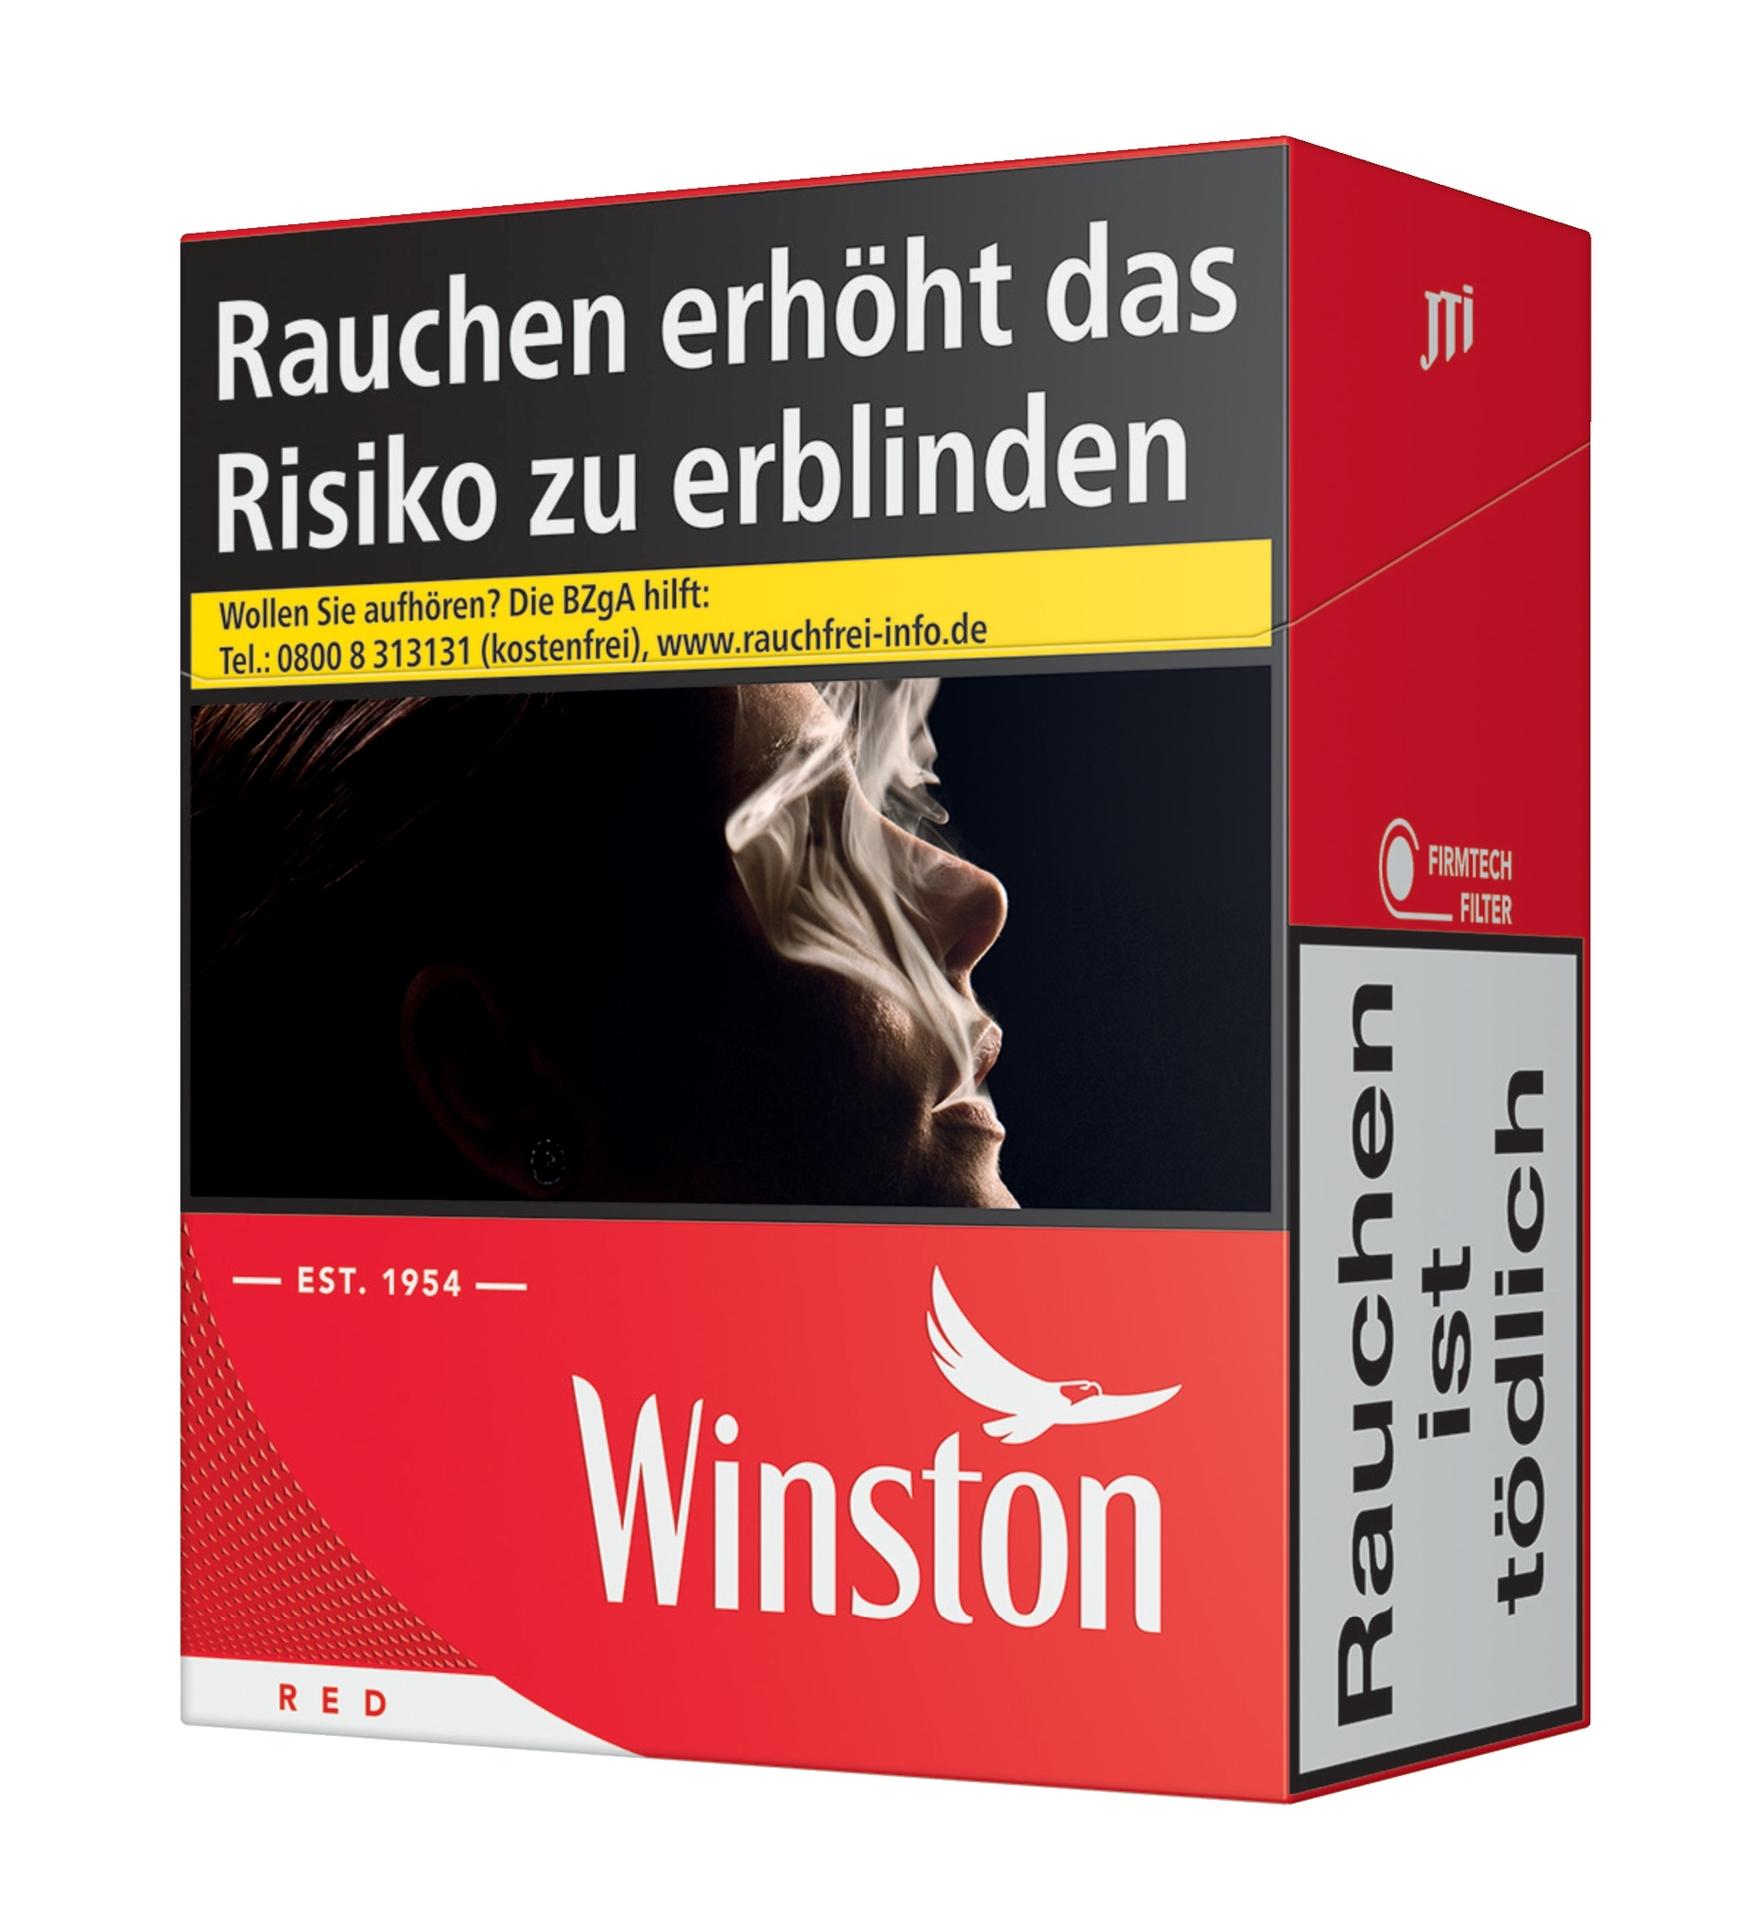 Winston Red BP 5XL 15 Euro